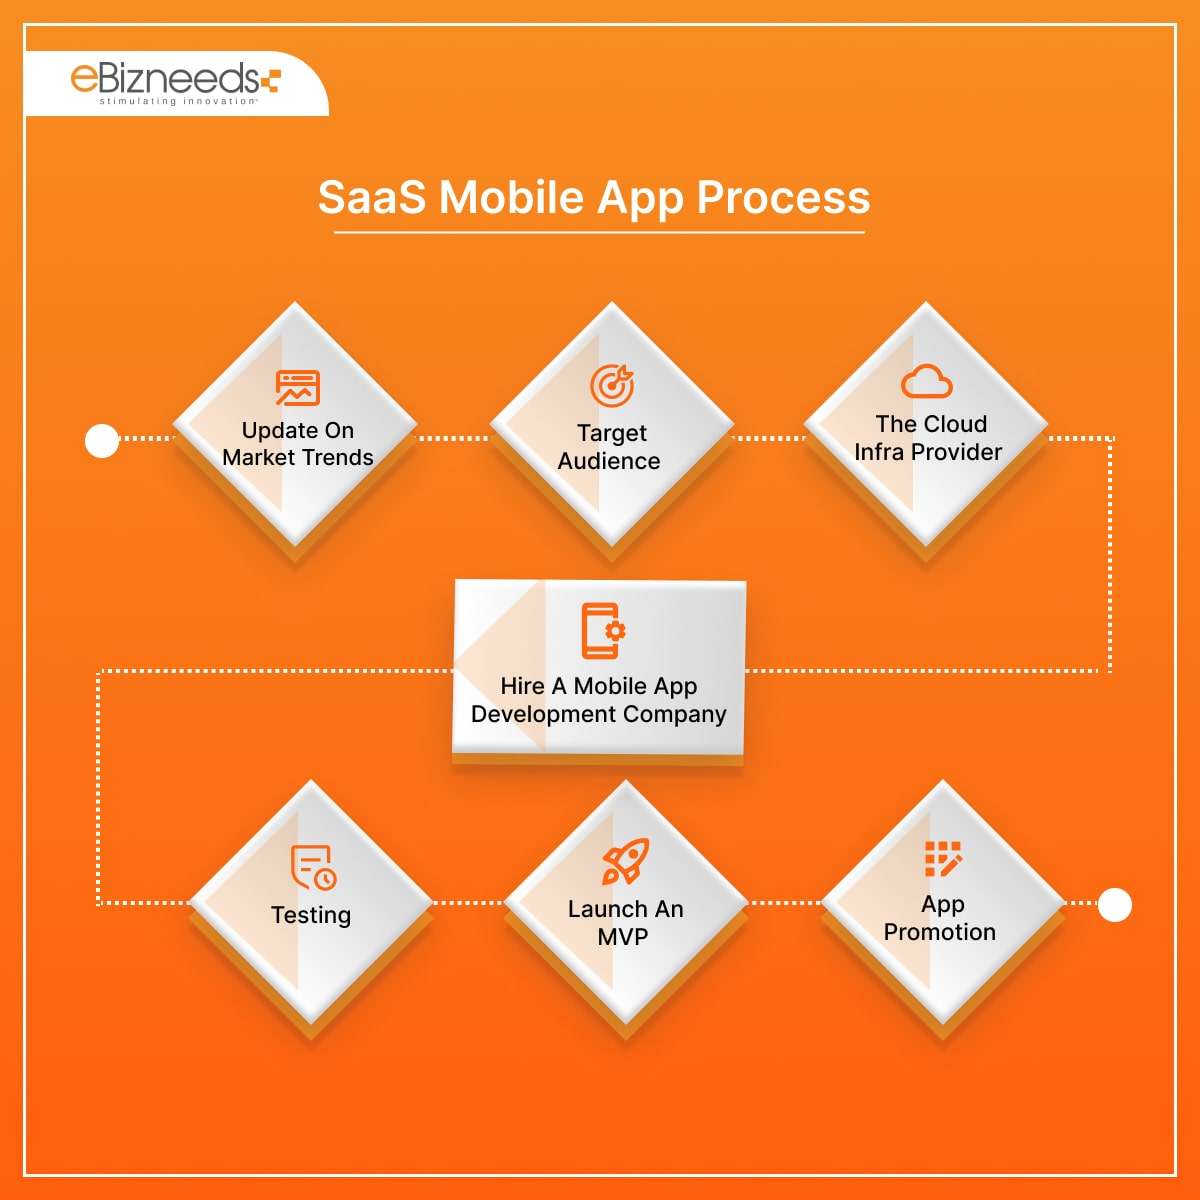 saas mobile app process